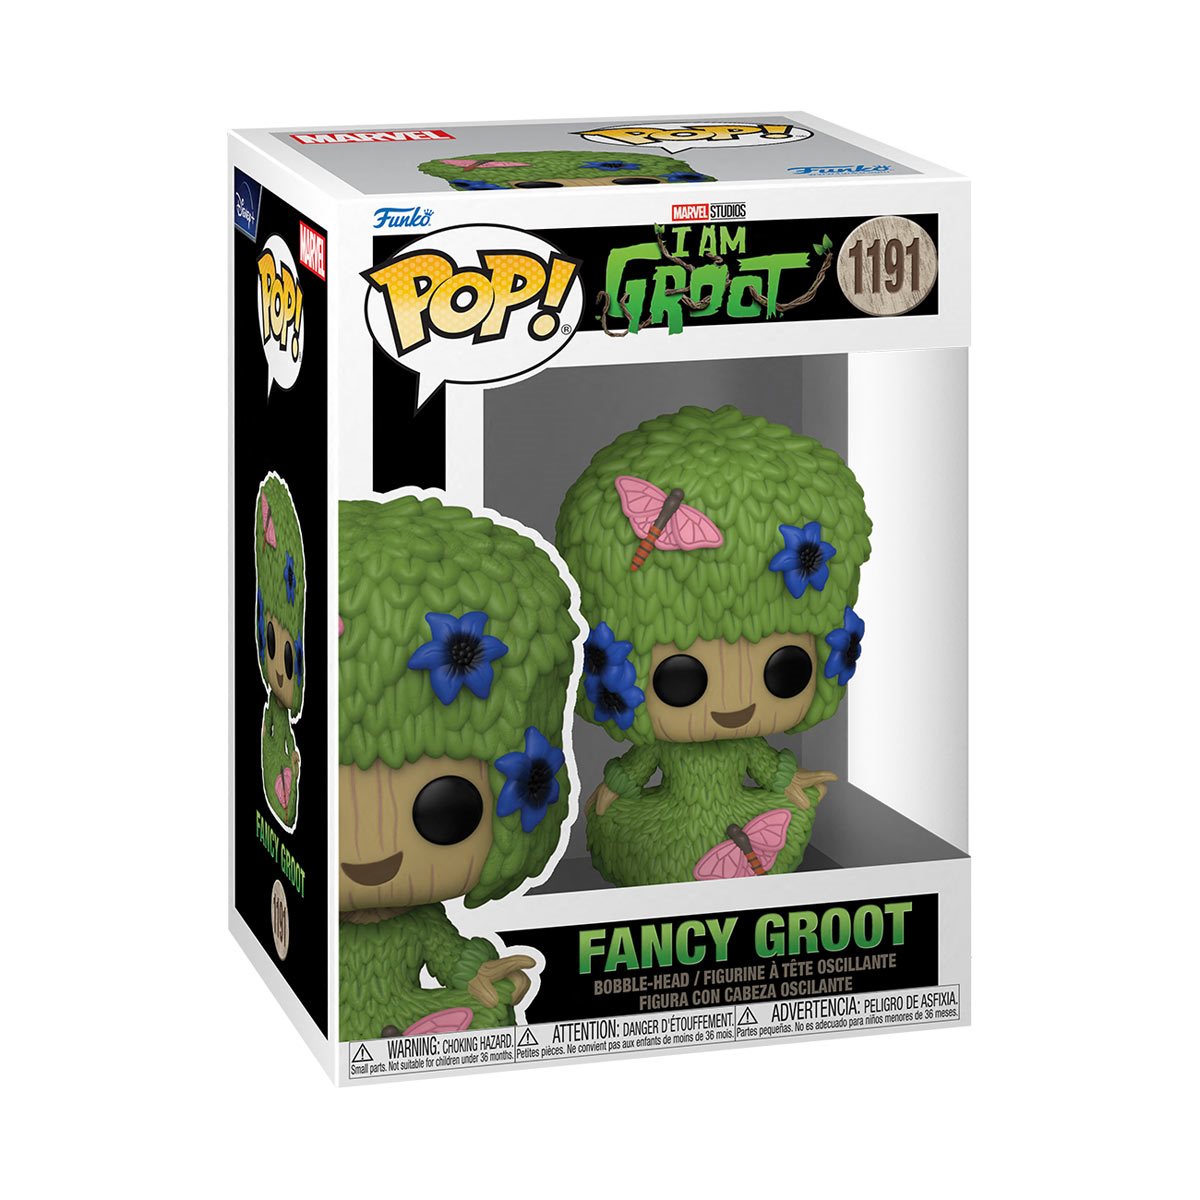 Funko Pop! I Am Groot Fancy Groot Vinyl Figure #1191